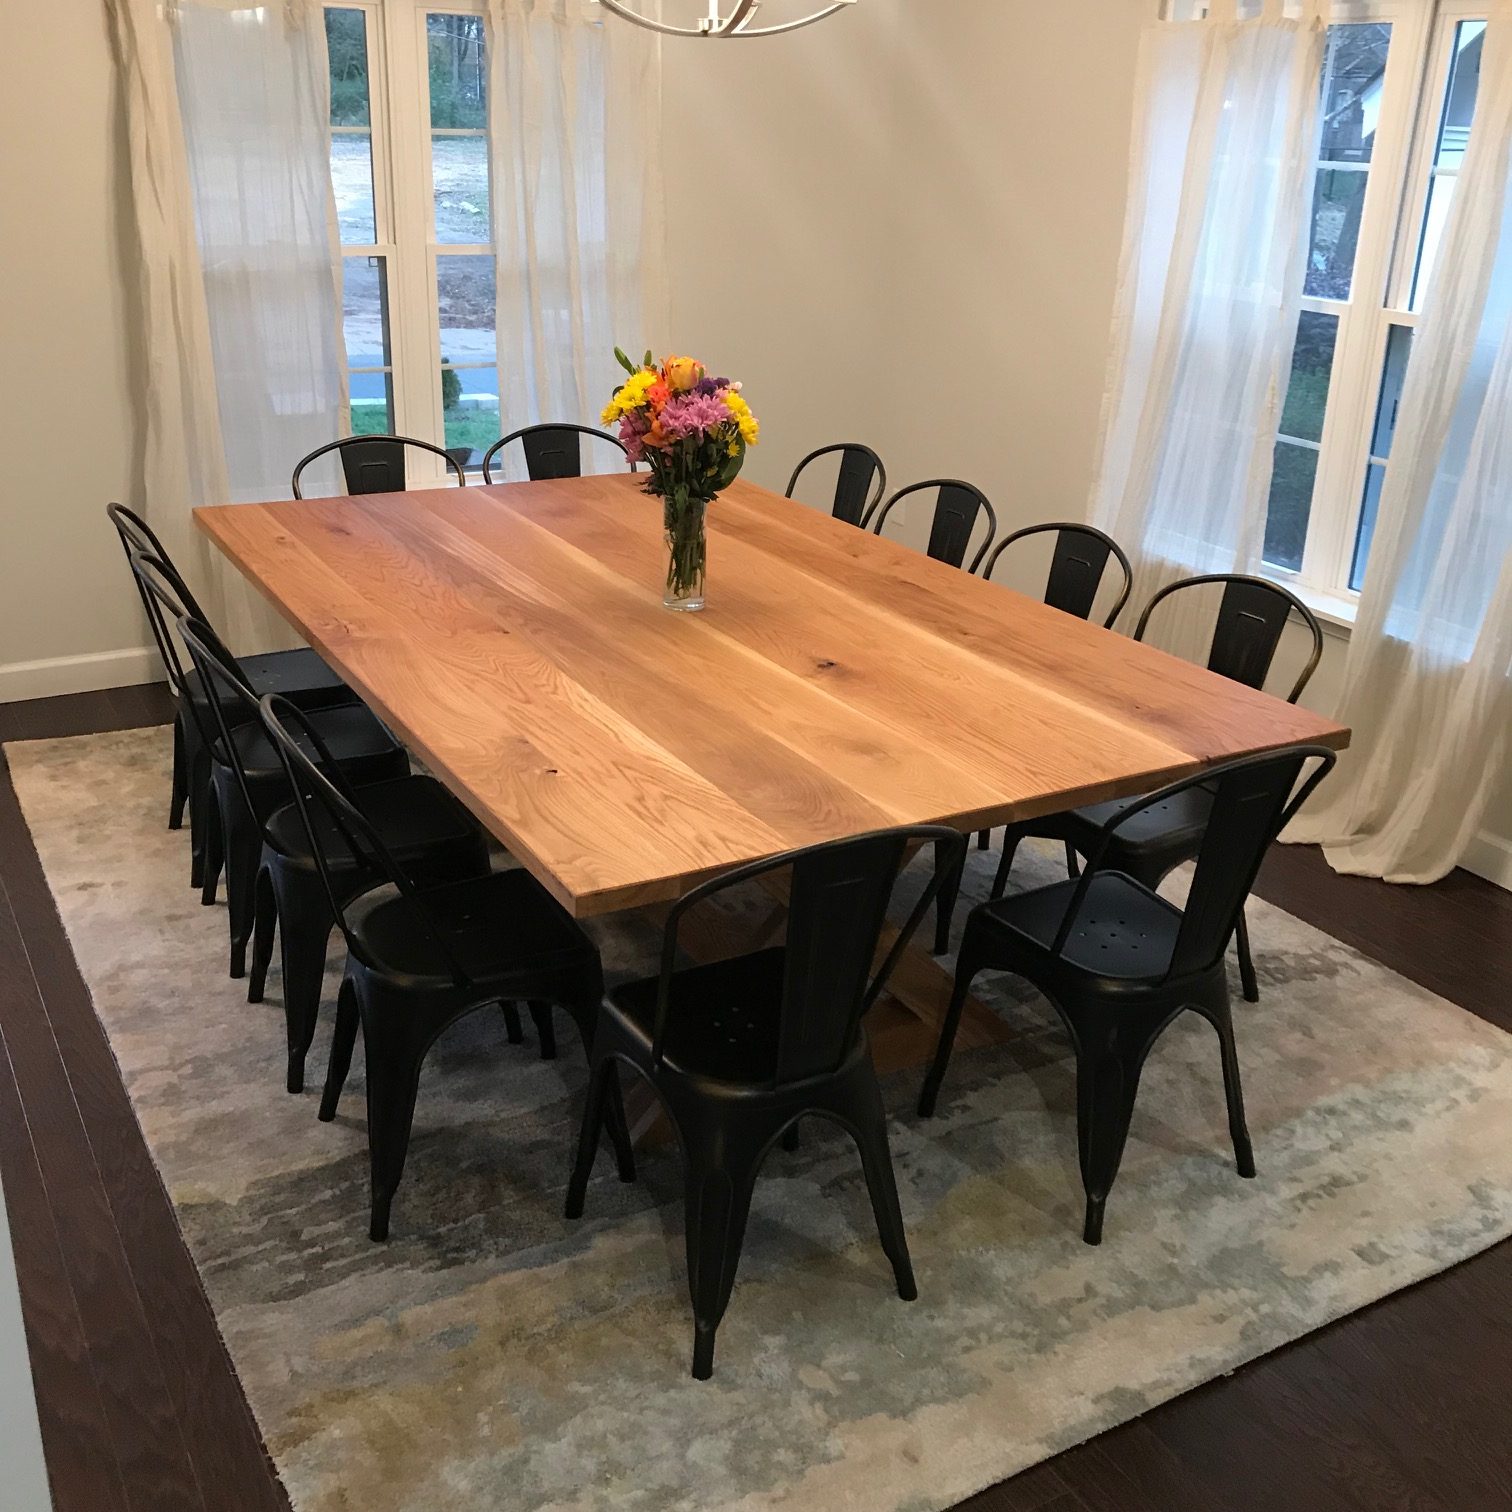 White Oak Dining Table - Johnson Company Woodworking : Johnson Company